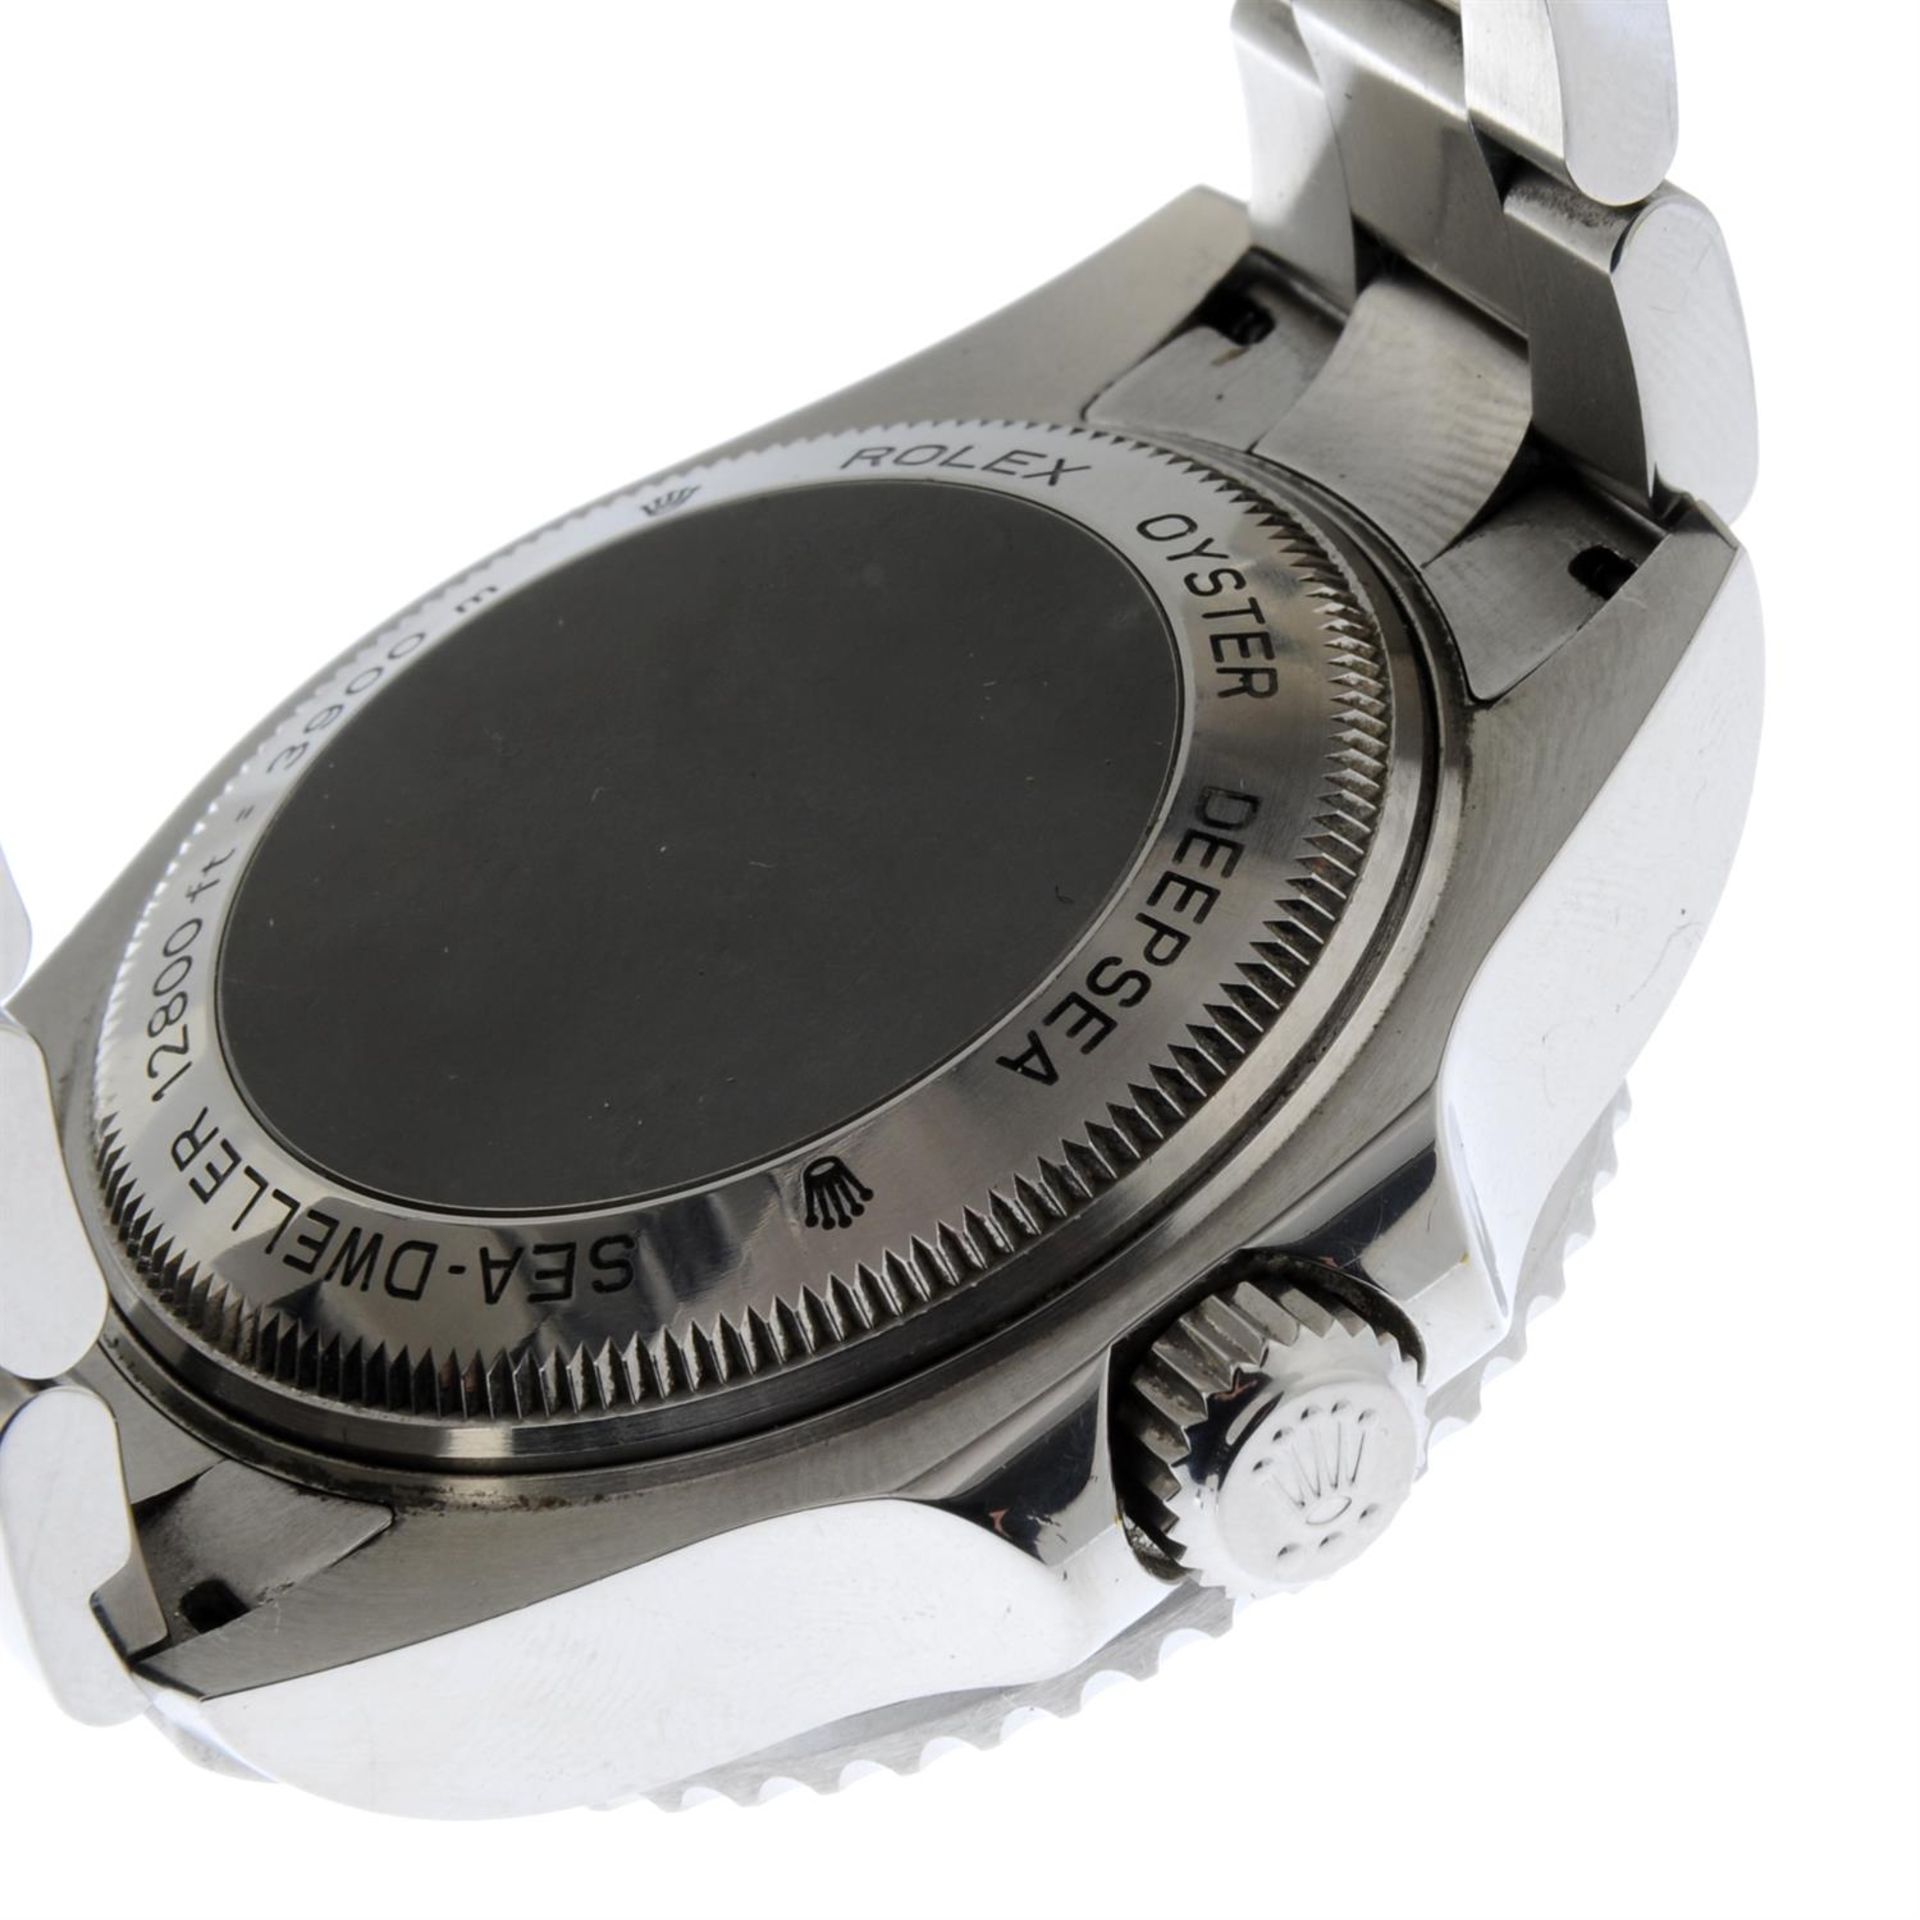 ROLEX - a stainless steel Oyster Perpetual Deepsea Sea-Dweller bracelet watch, 43mm. - Bild 2 aus 6